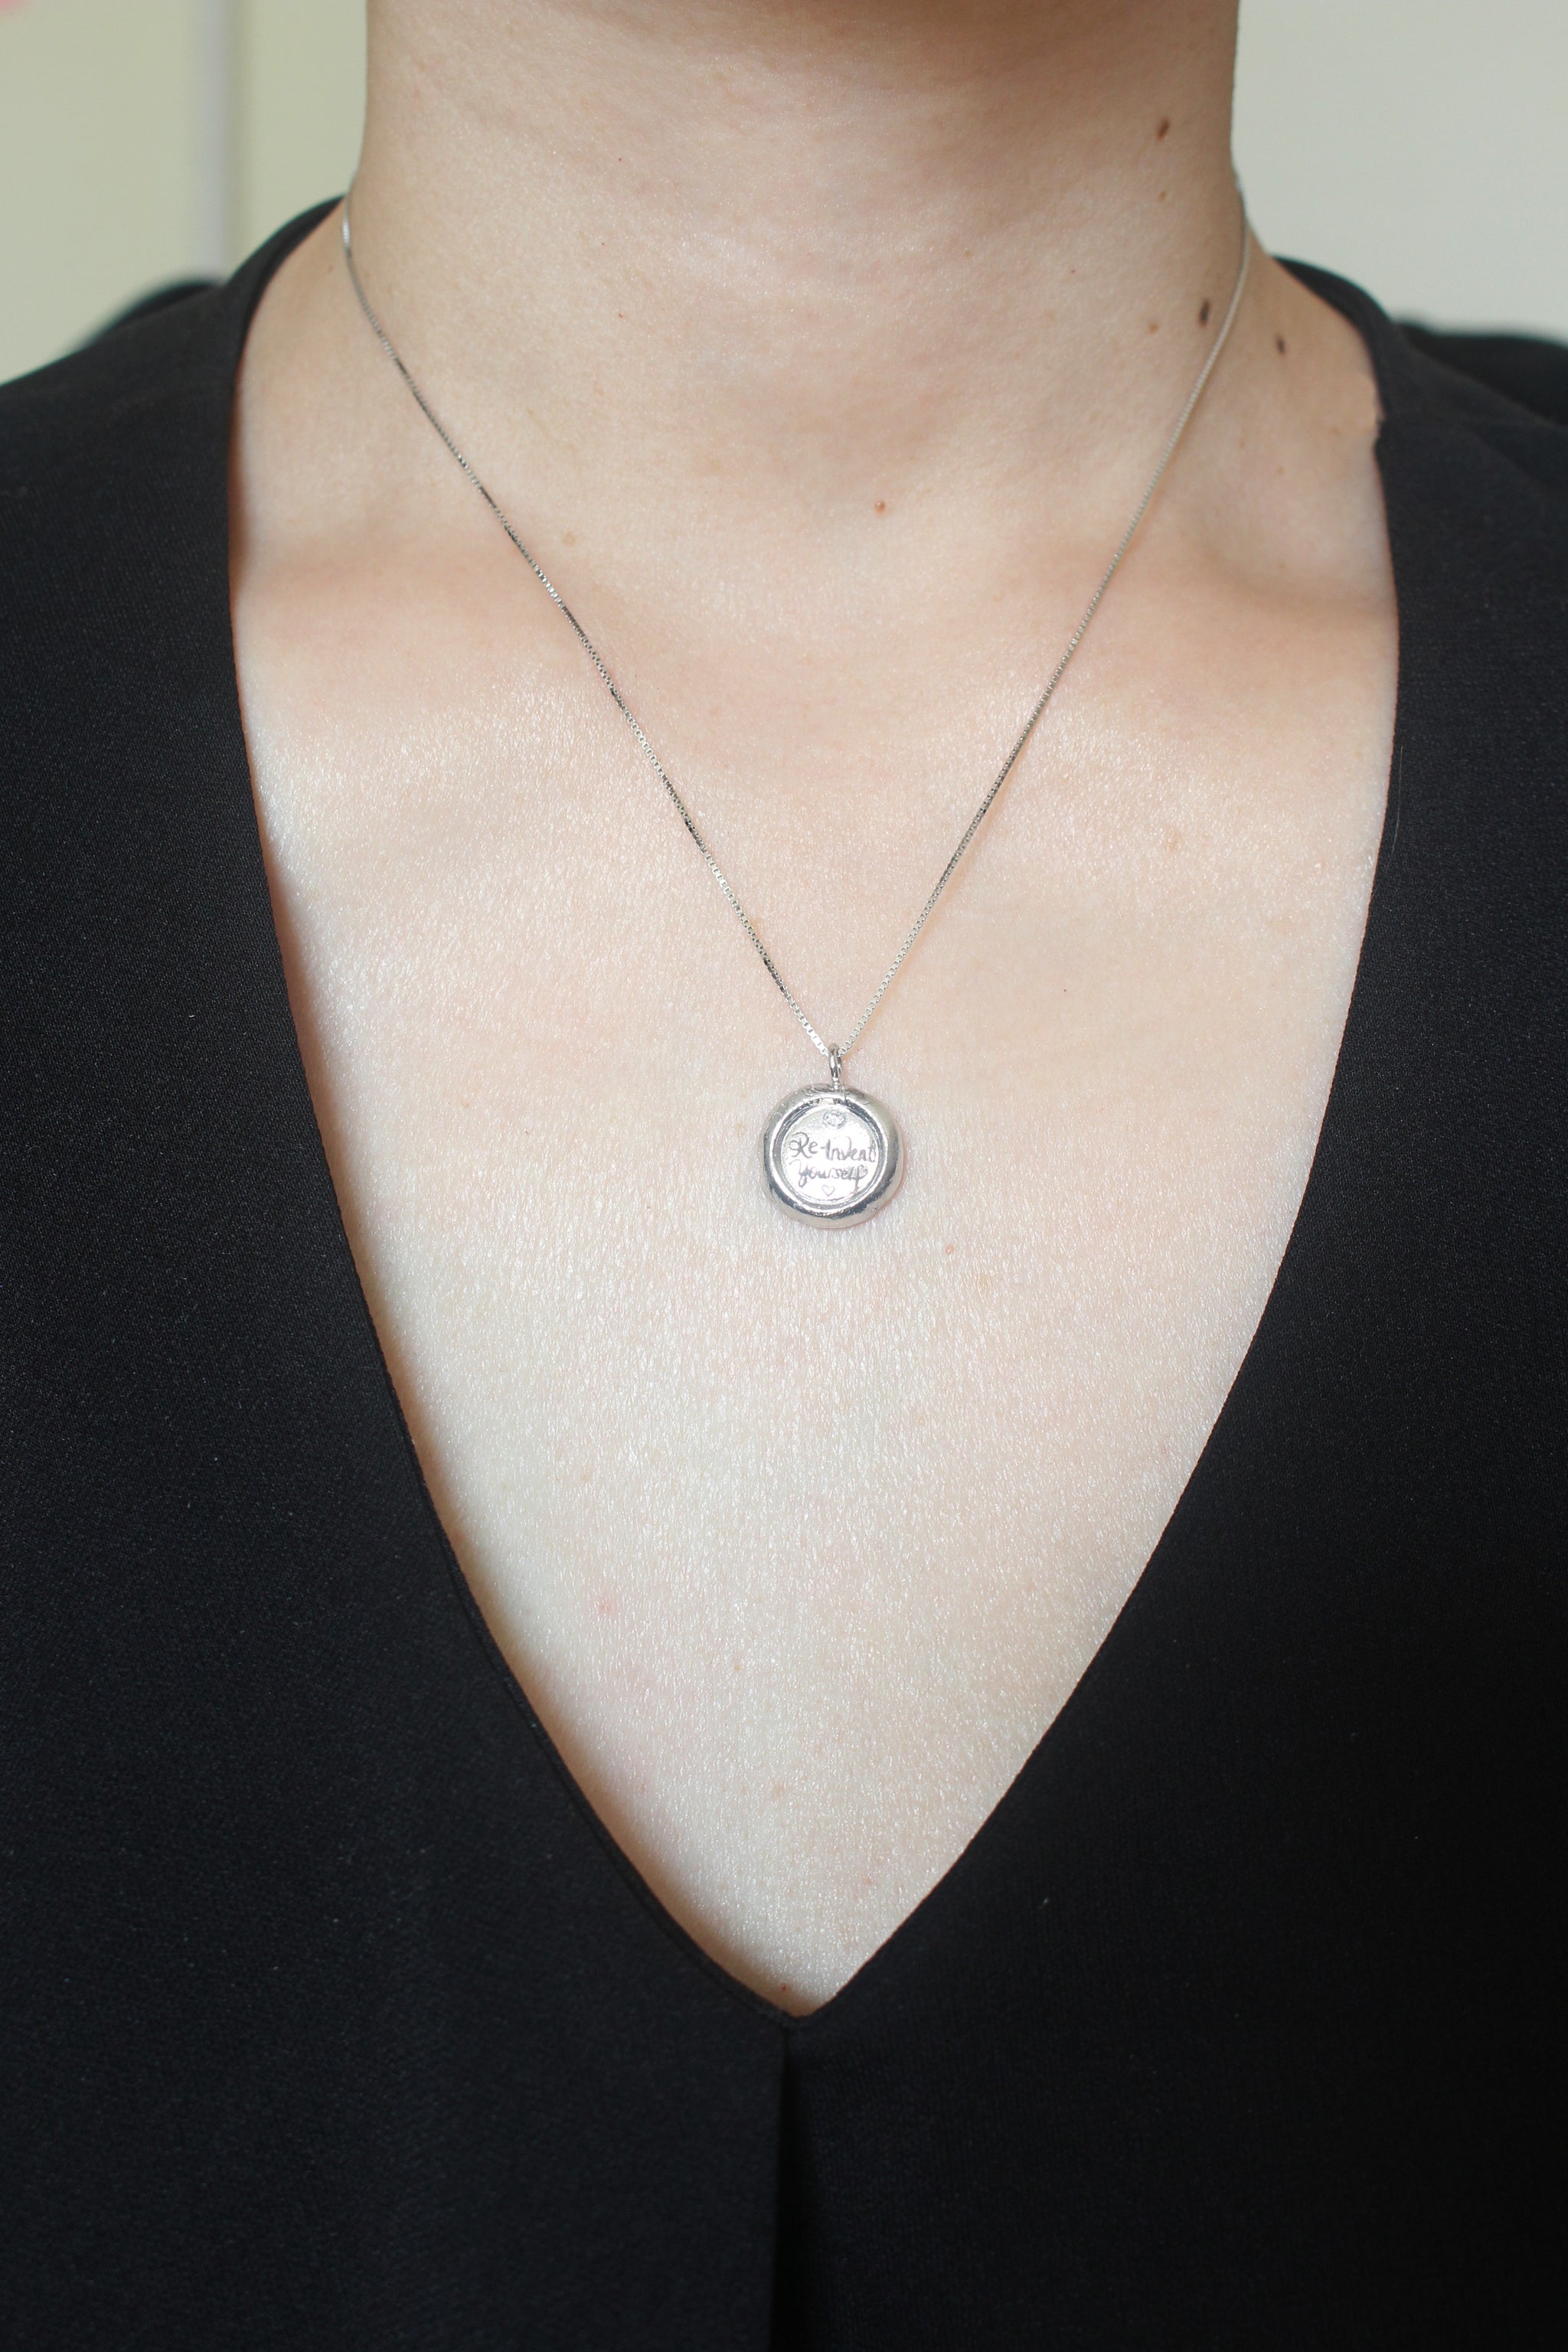 Leave Sparkles - Empowerment Diamond Silver Necklace